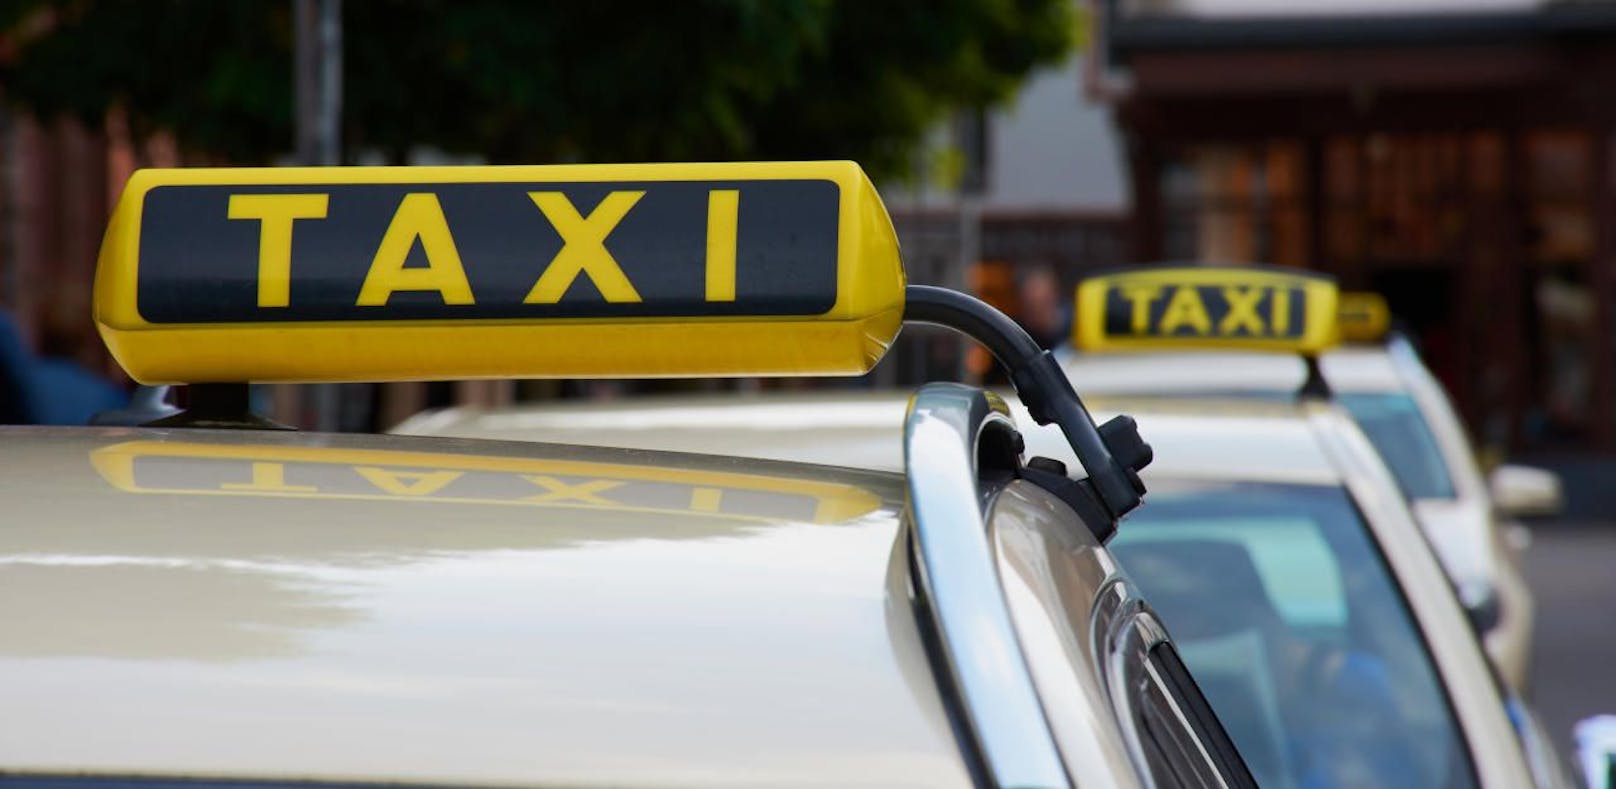 Symbolbild zweier Taxis.